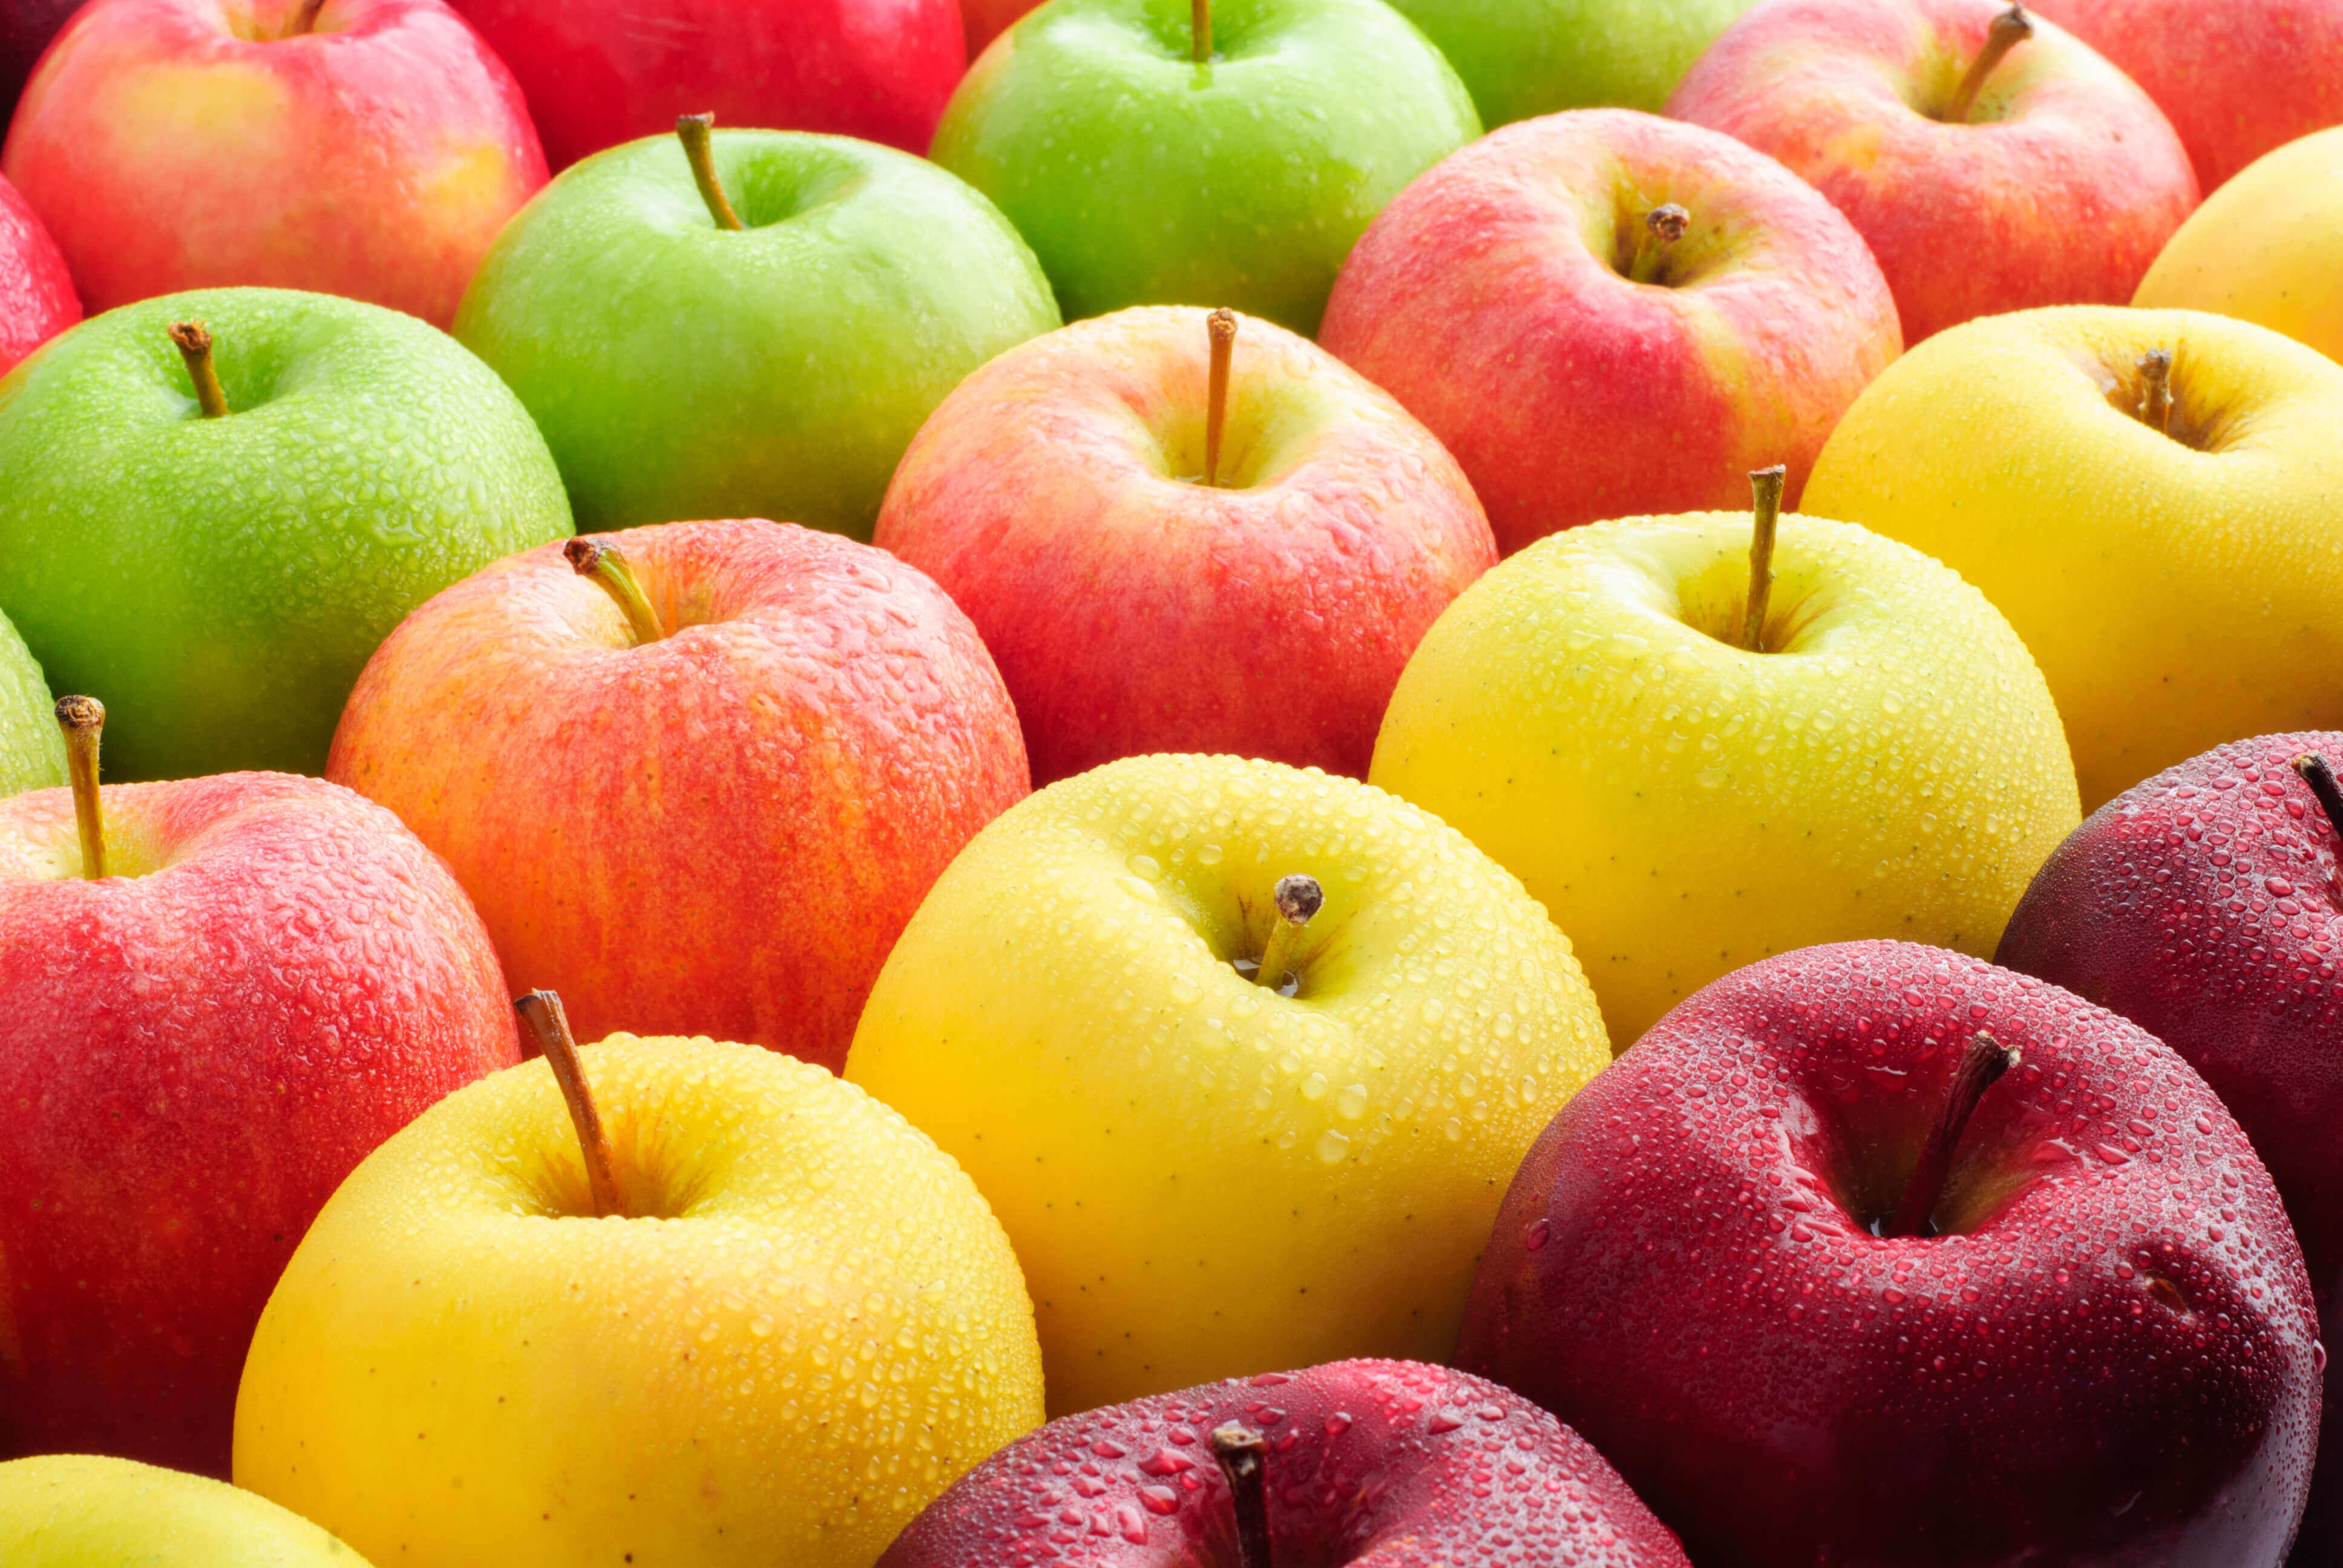 Many Types & Tastes of Apples